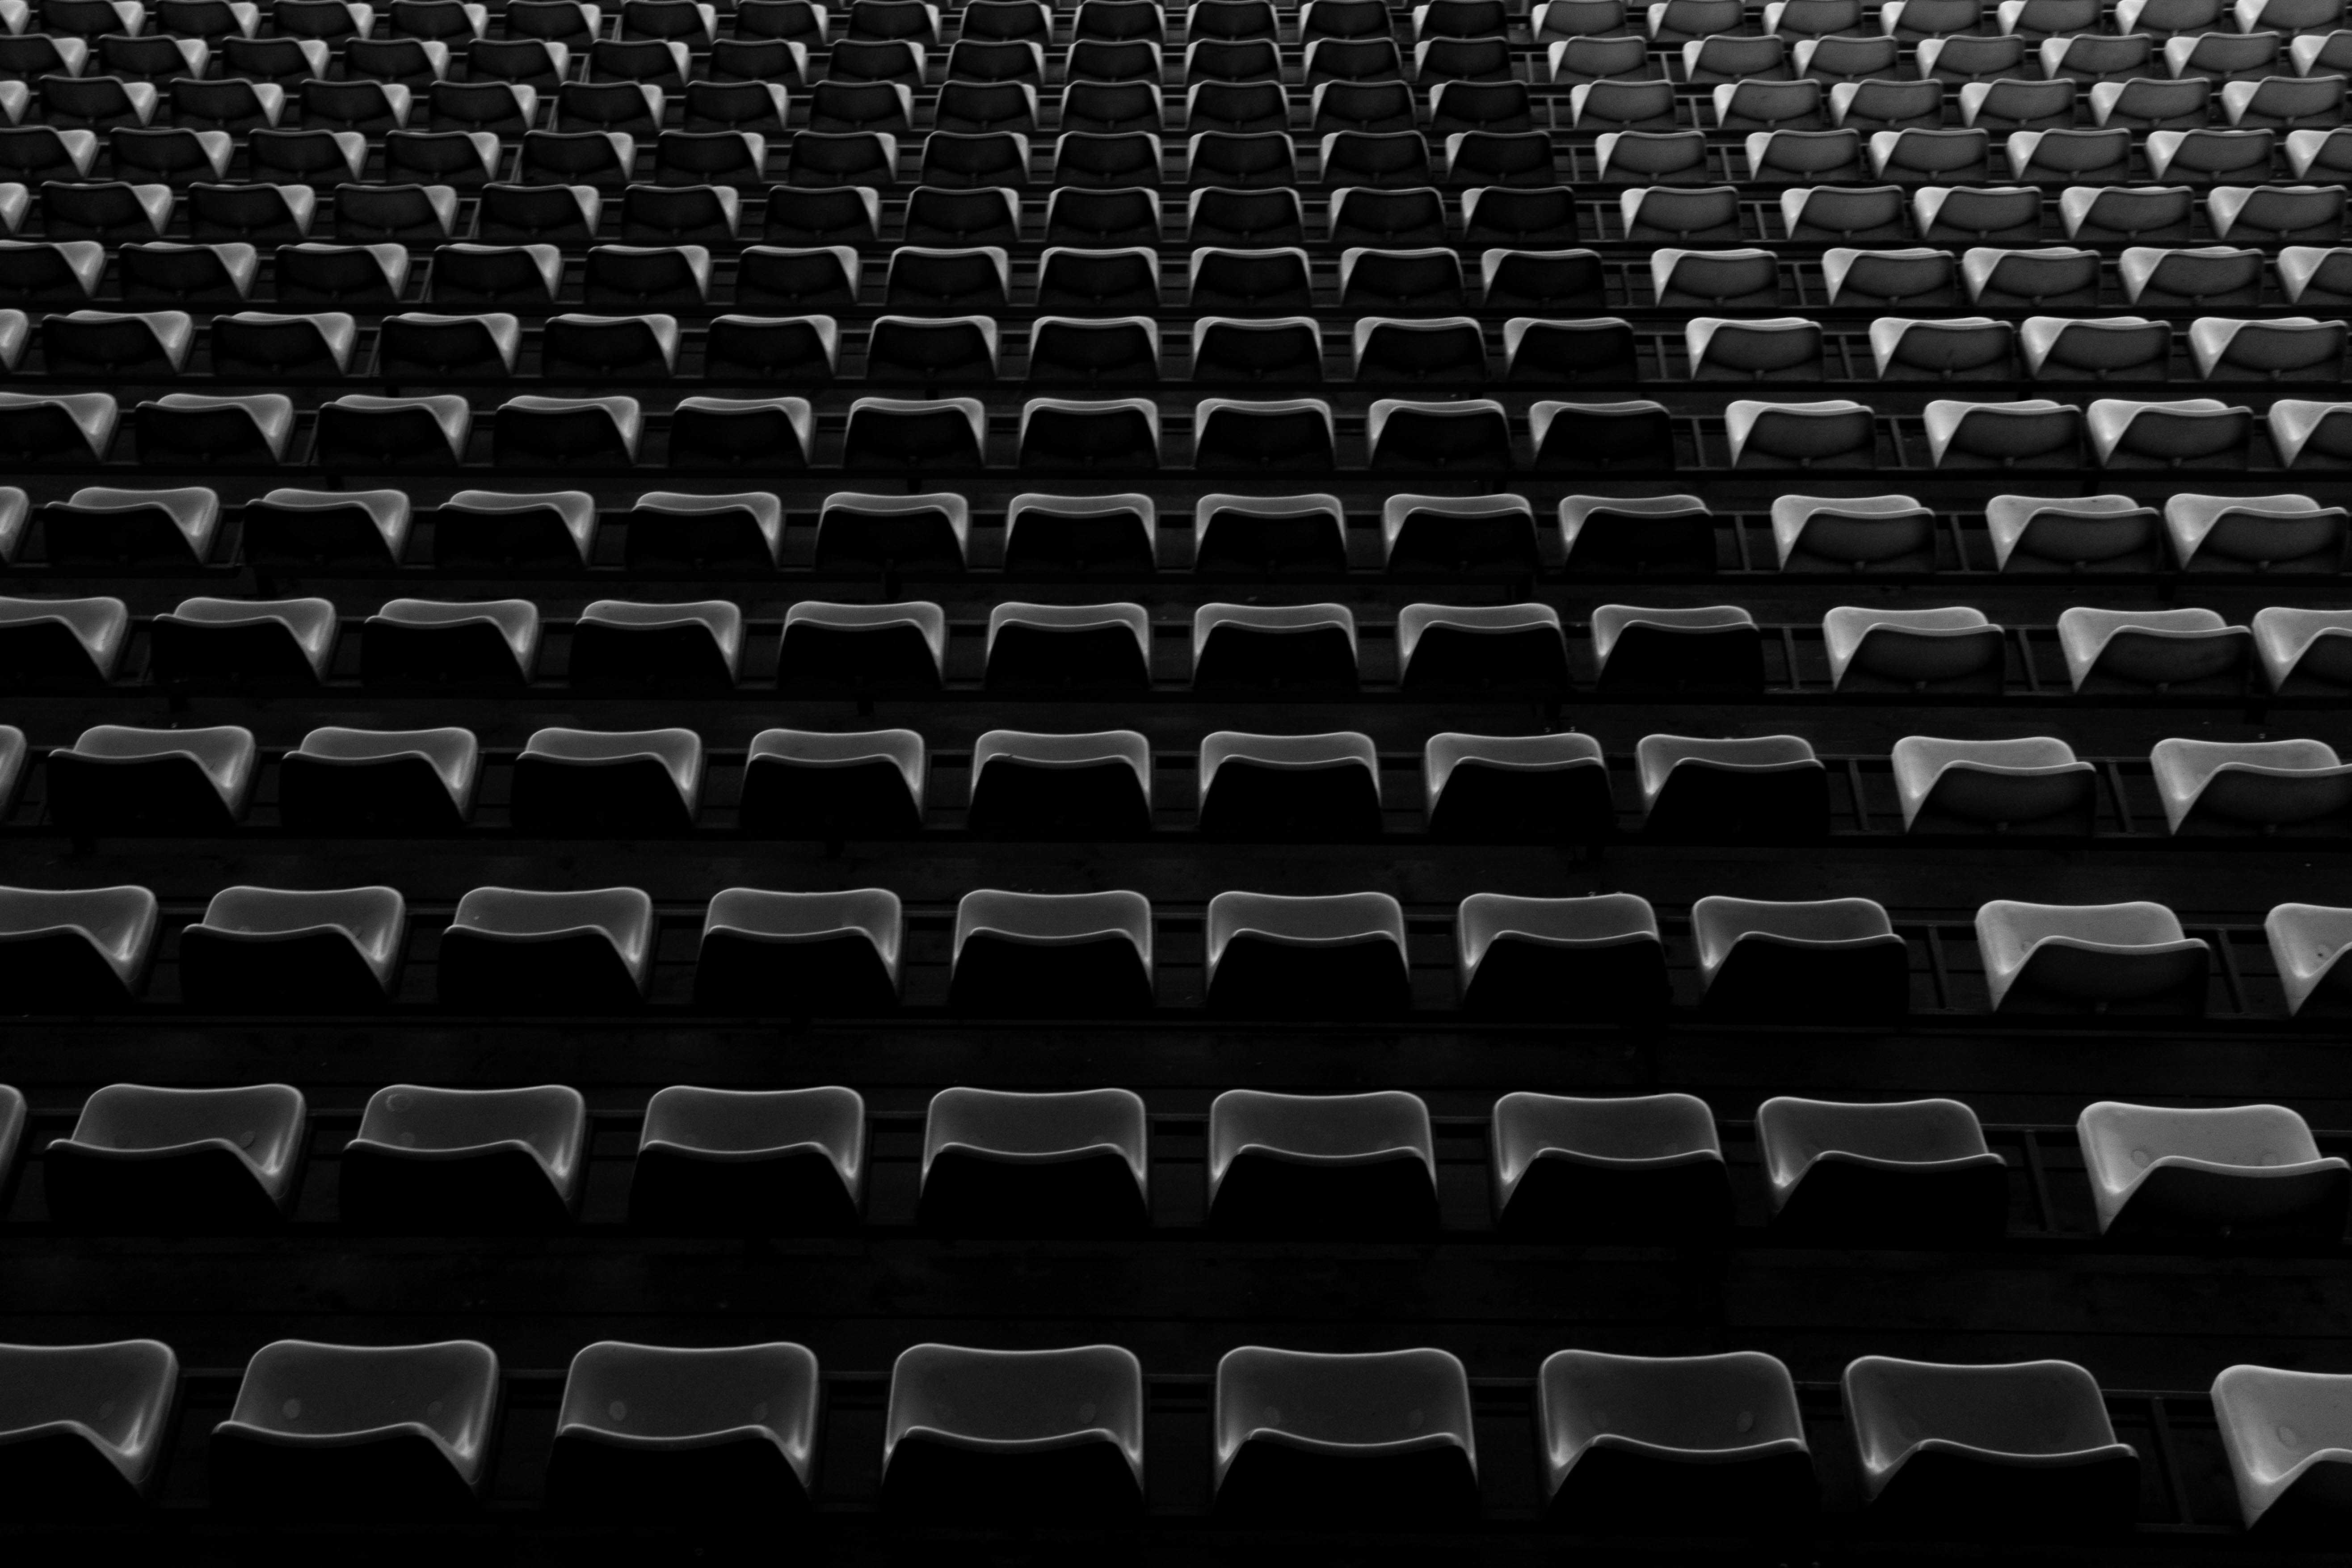 black and white, black, seats, tribune, seating